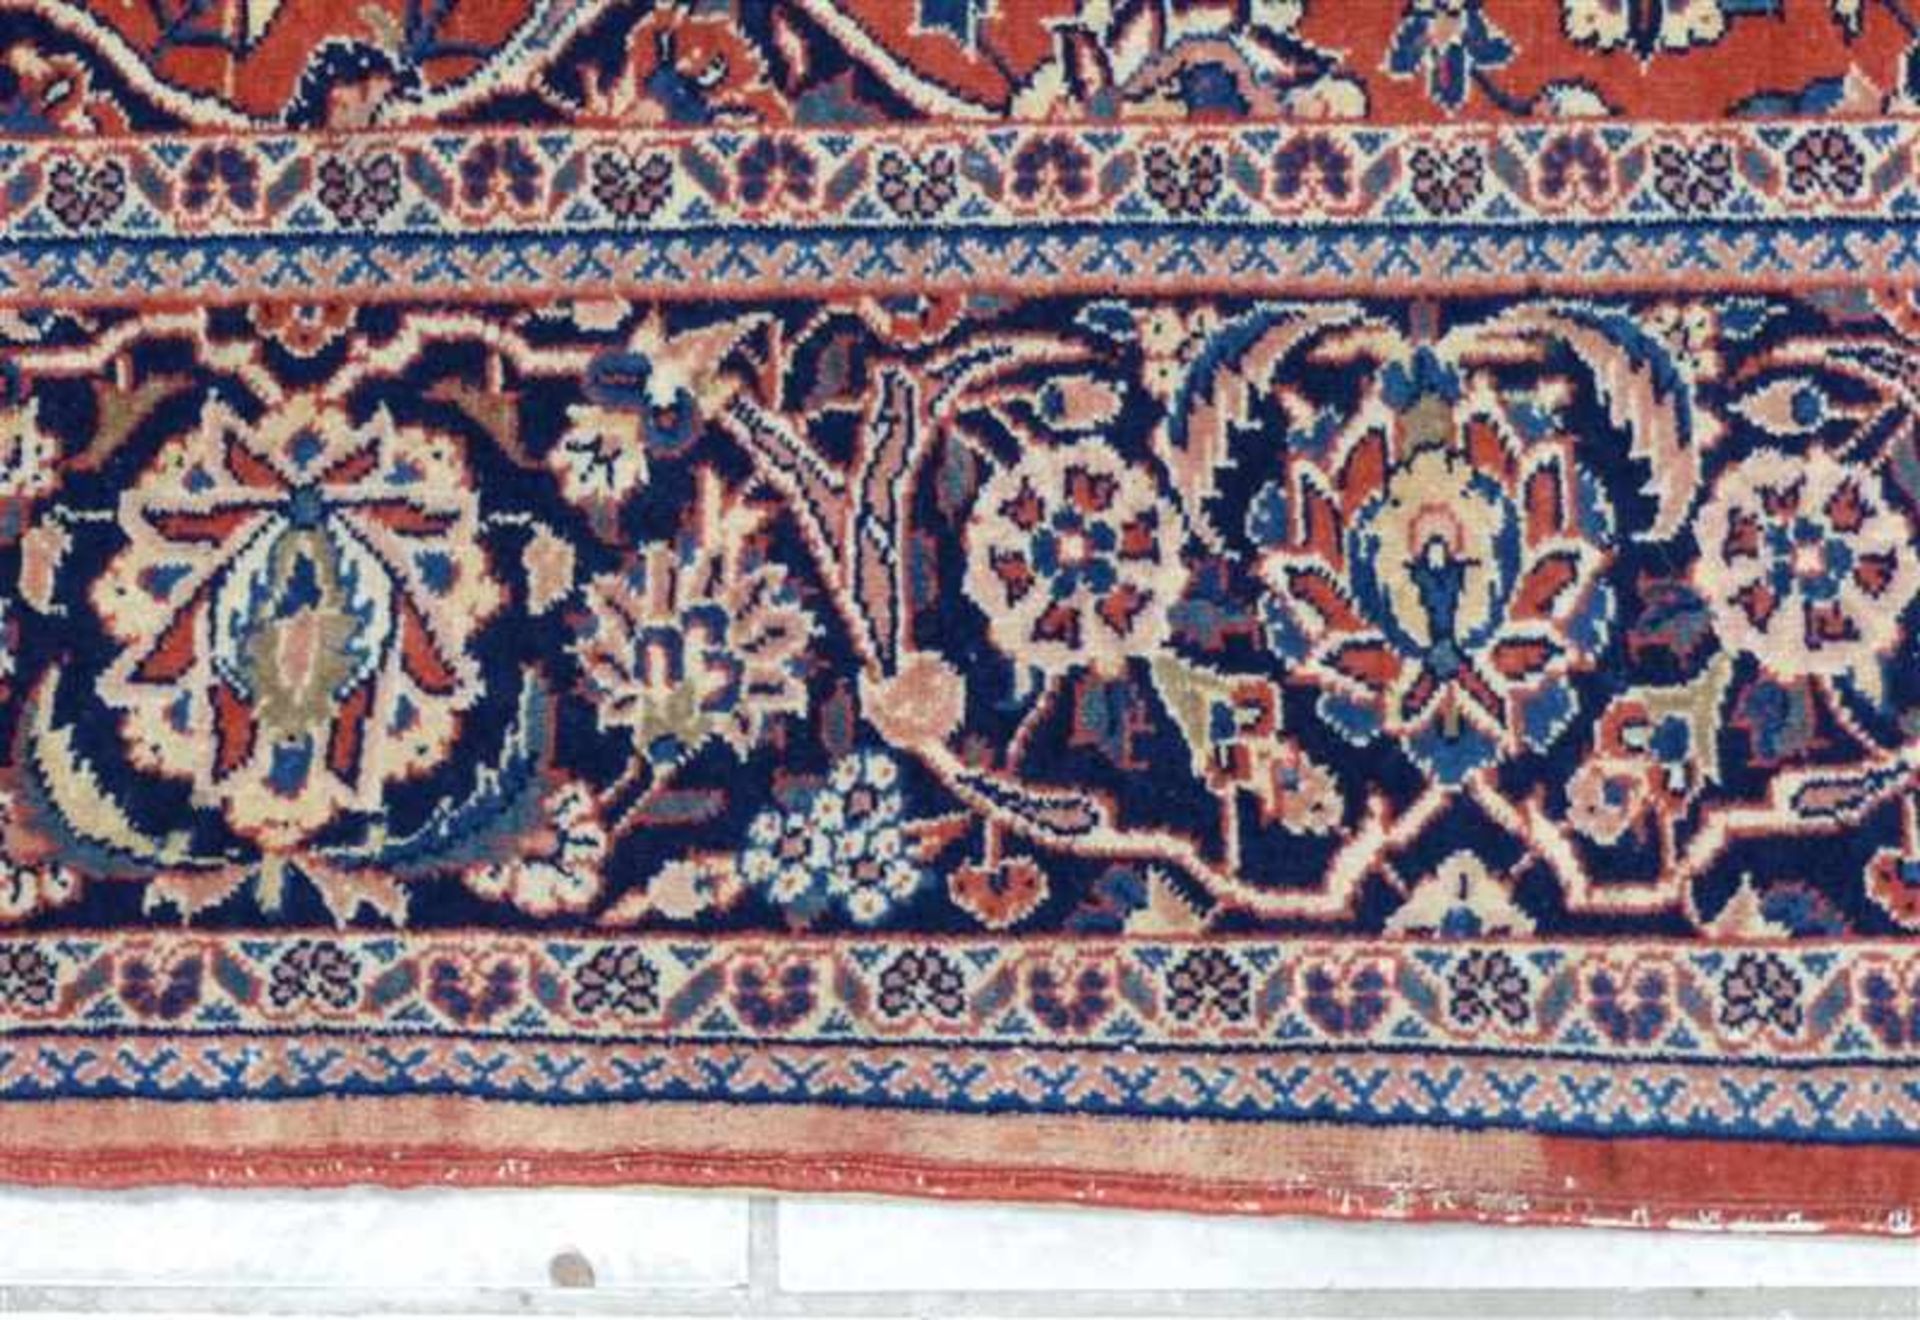 Keshan Brückeblau-rot grundig, florares Muster, Mittelmedaillon, Randbeschädigung, 205x140 cm, - Bild 3 aus 4